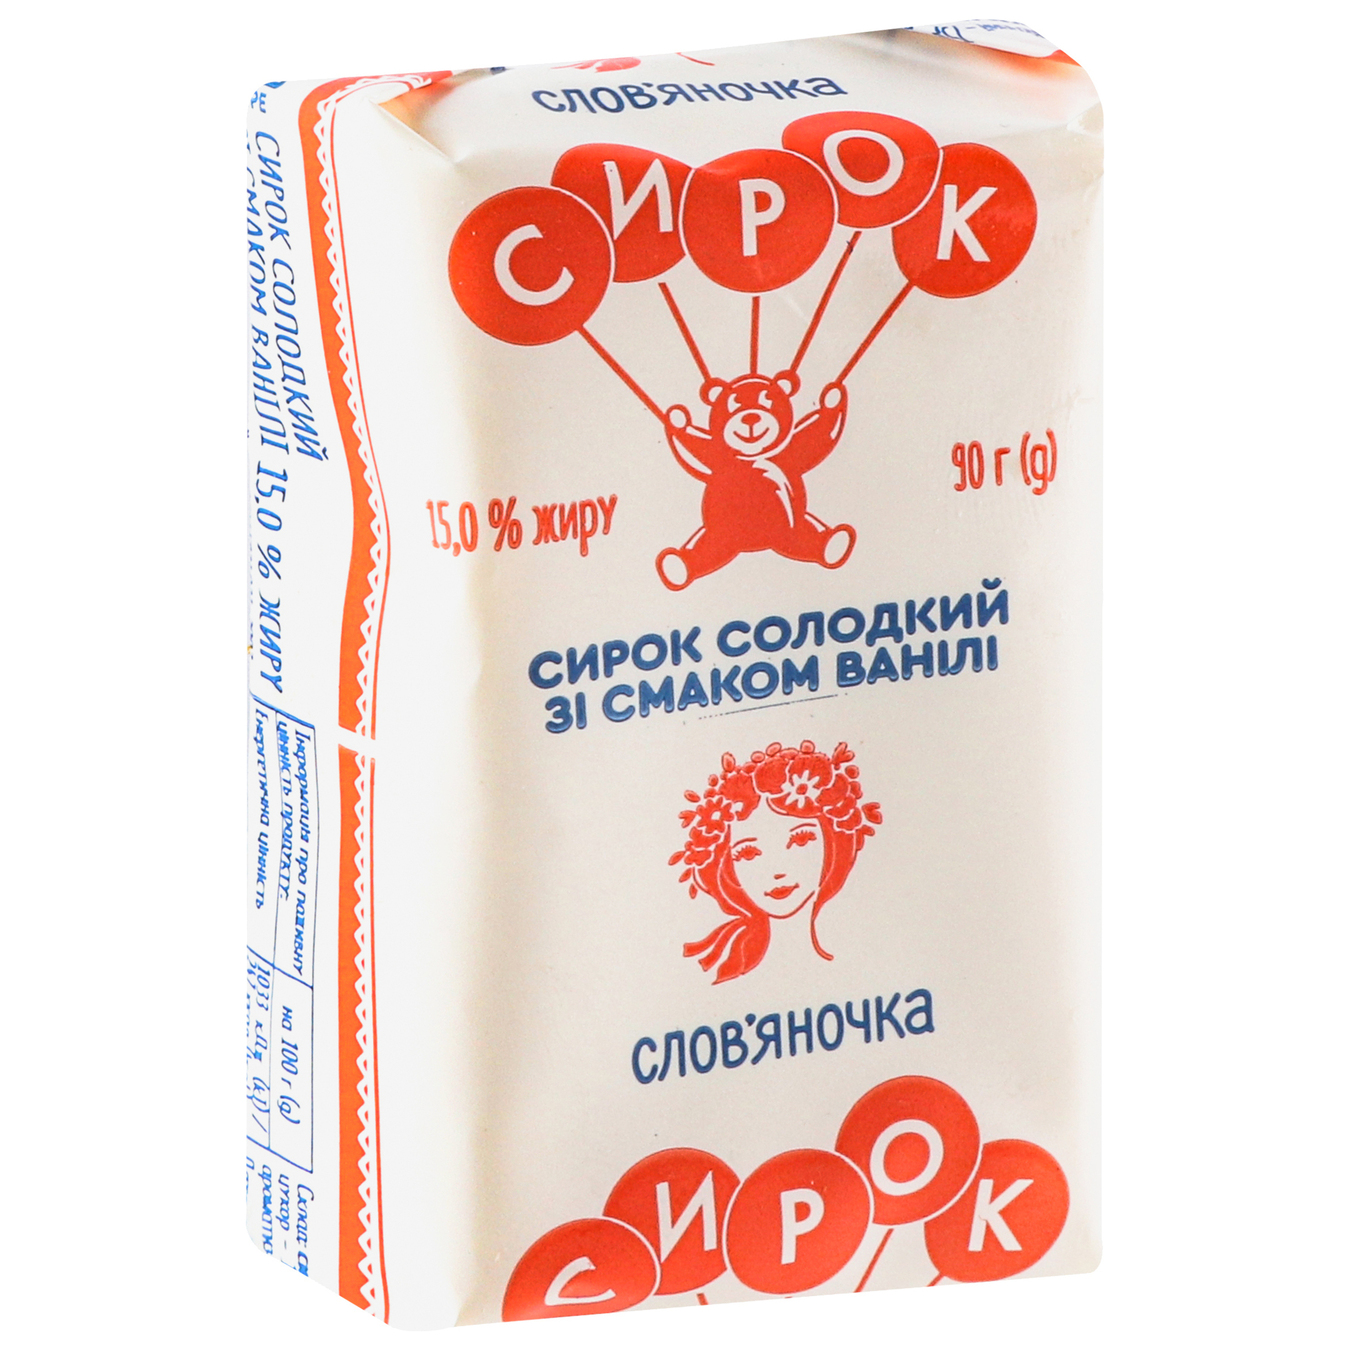 Slavyanochka cottage cheese with vanilla flavor sweet 0,15 90g 6